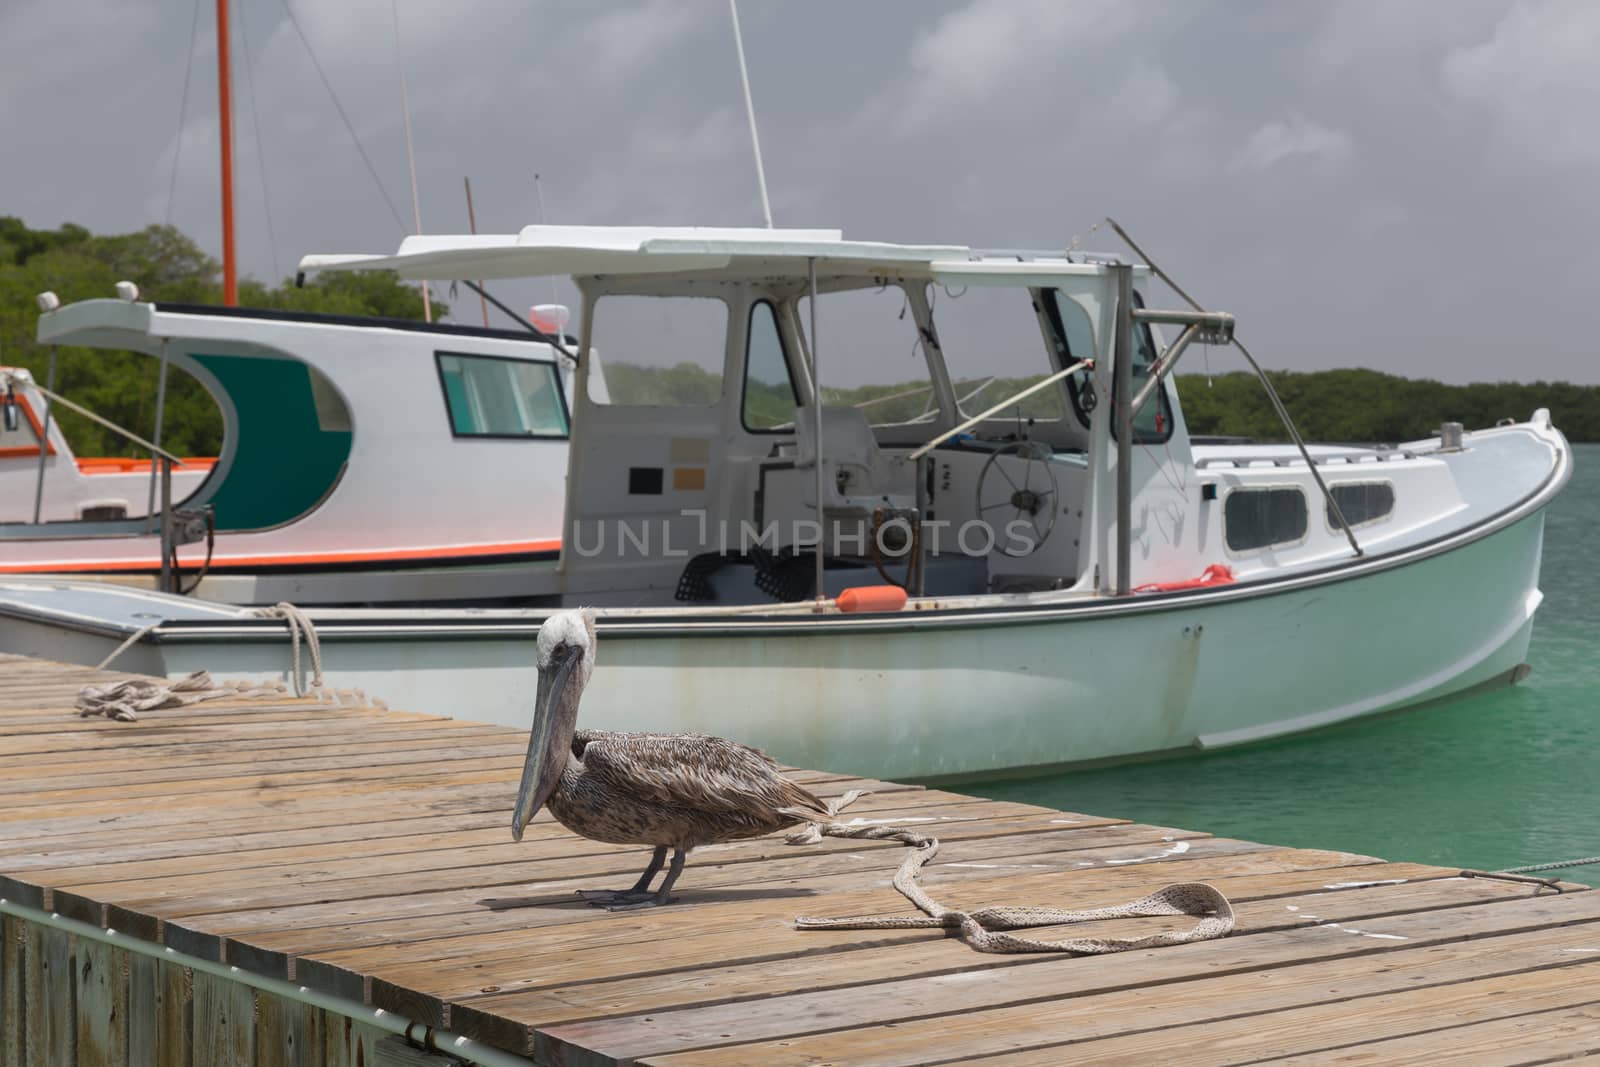 Pelican Caribbean Bird nature Bonaire island Caribbean Sea by desant7474